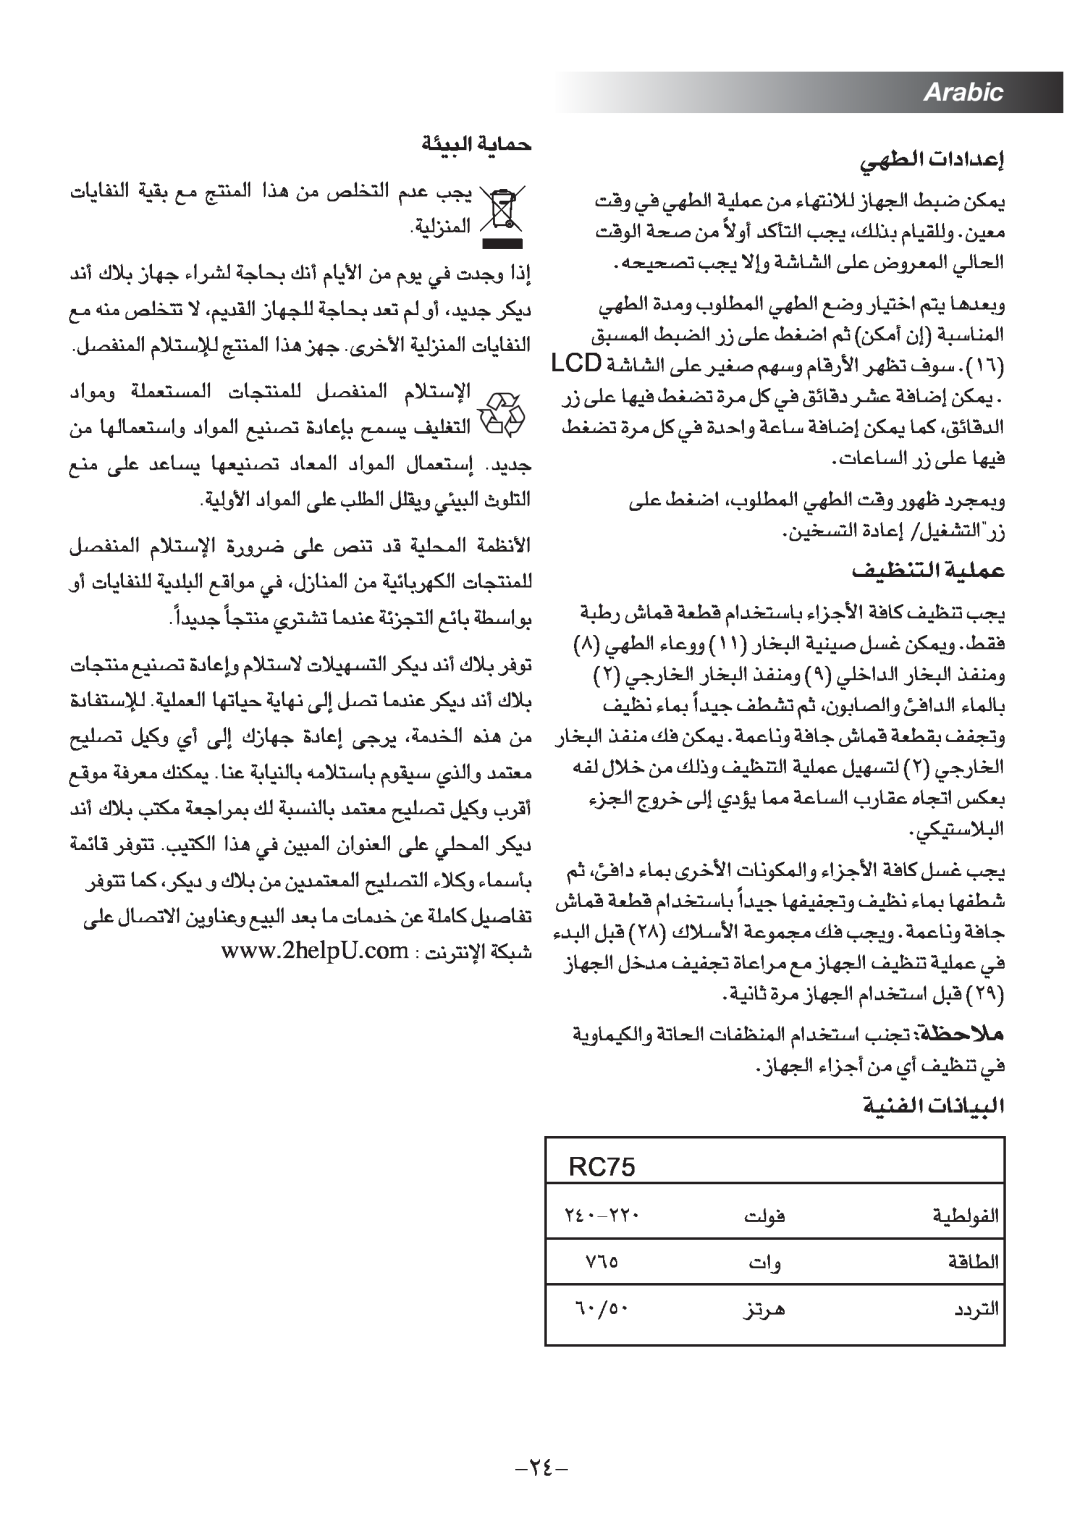 Black & Decker RC75 manual DNw∞« ´b«œ«‹≈, Arabic, 57CR, 042-022, X∞u≠, 05/06, d¢e≥, OµW∞∂« LU¥W 